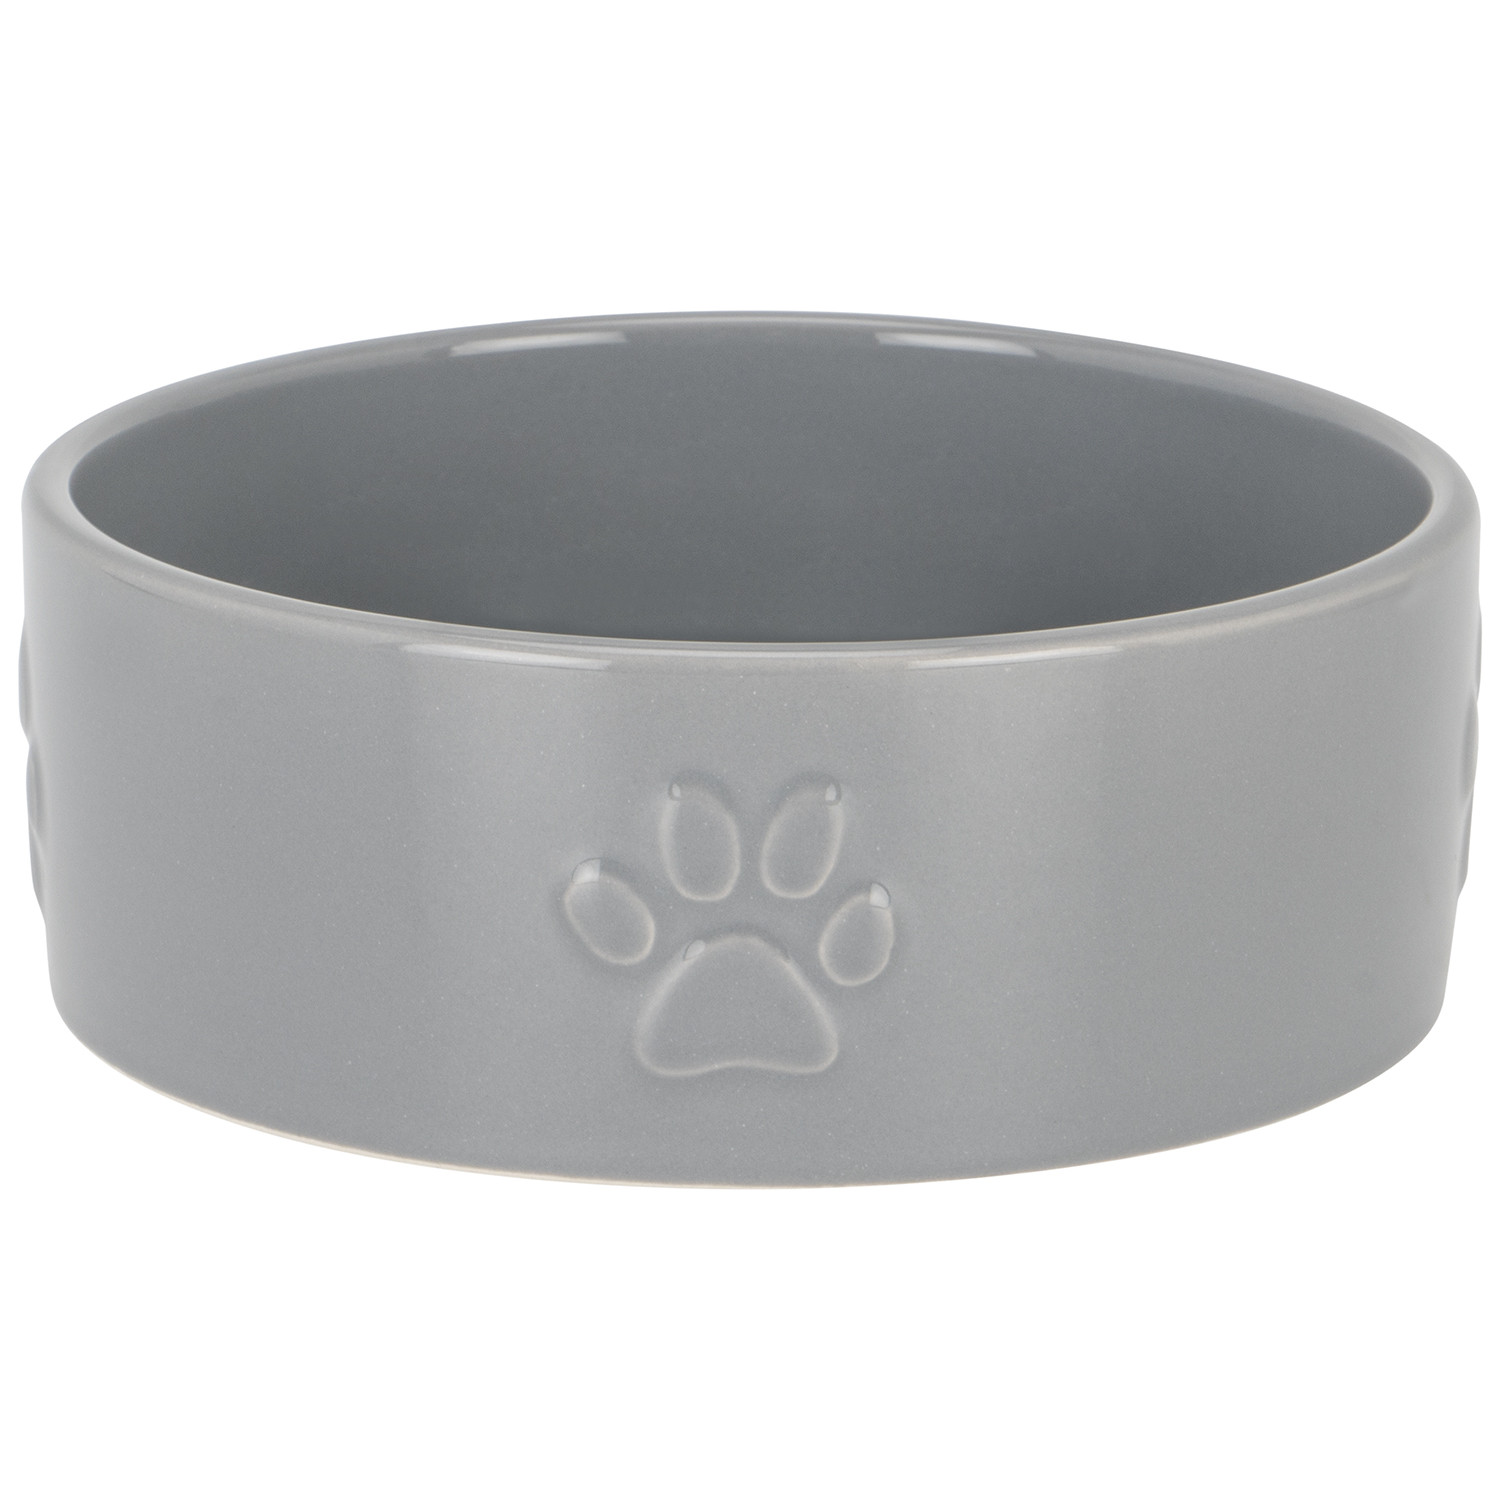 Clever Paws Grey Ceramic Medium Pet Bowl Image 1